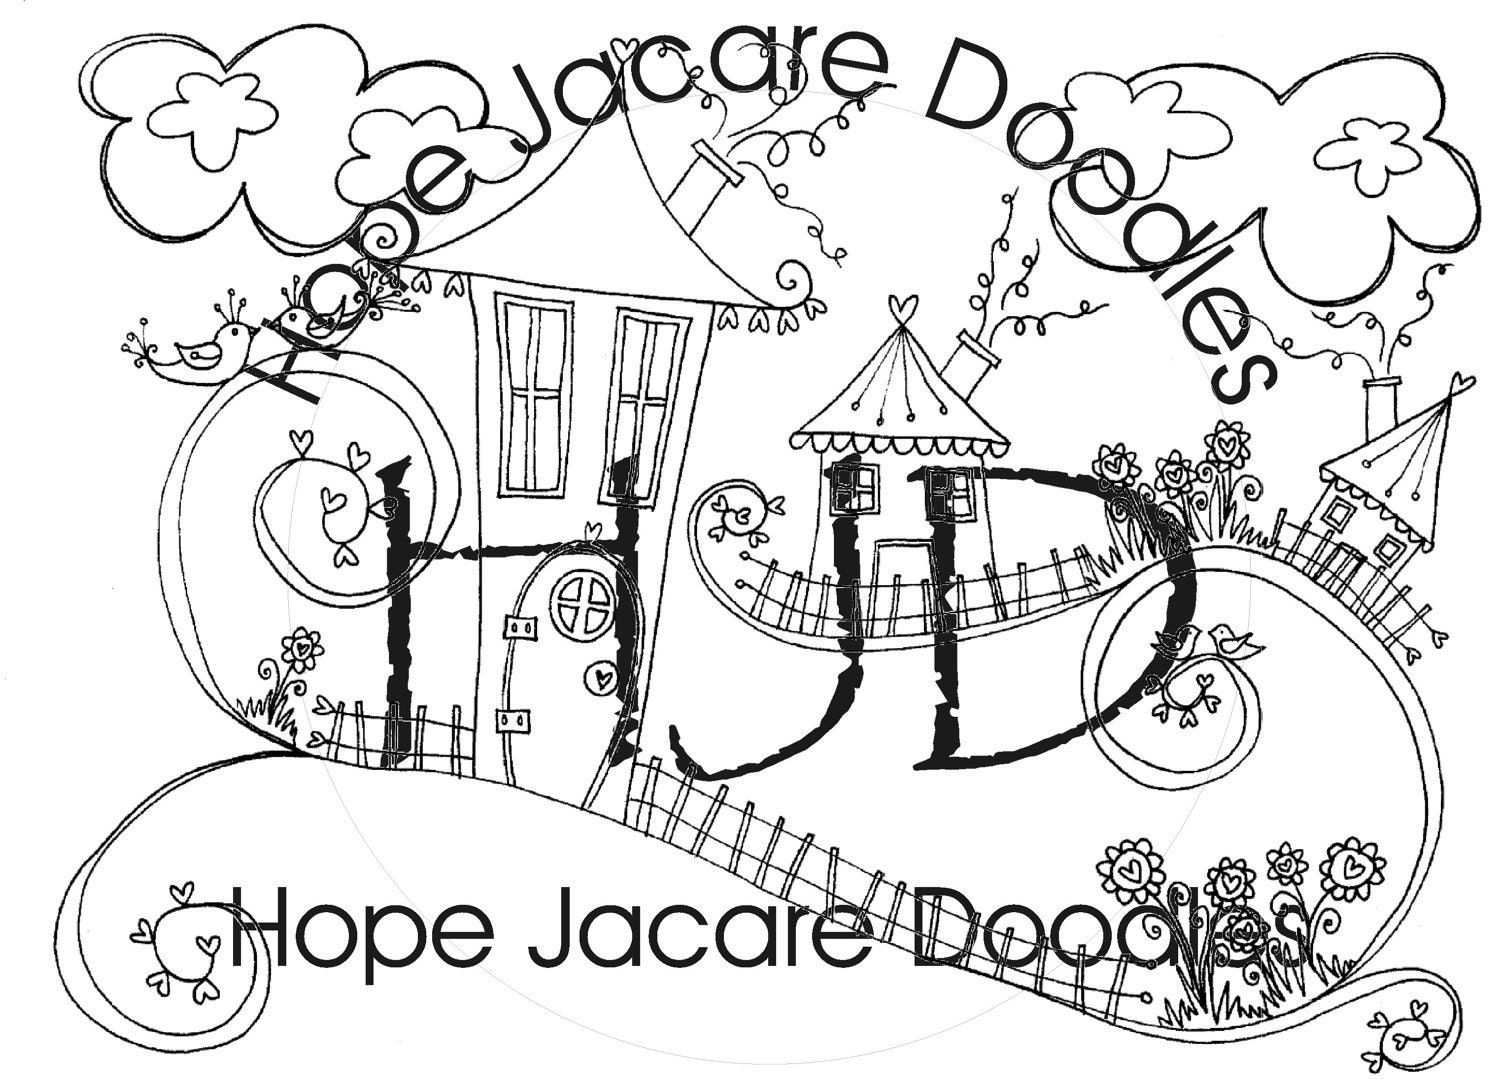 Swirly street digi stamp by Hope jacare - cardmaking / Scrapbooking